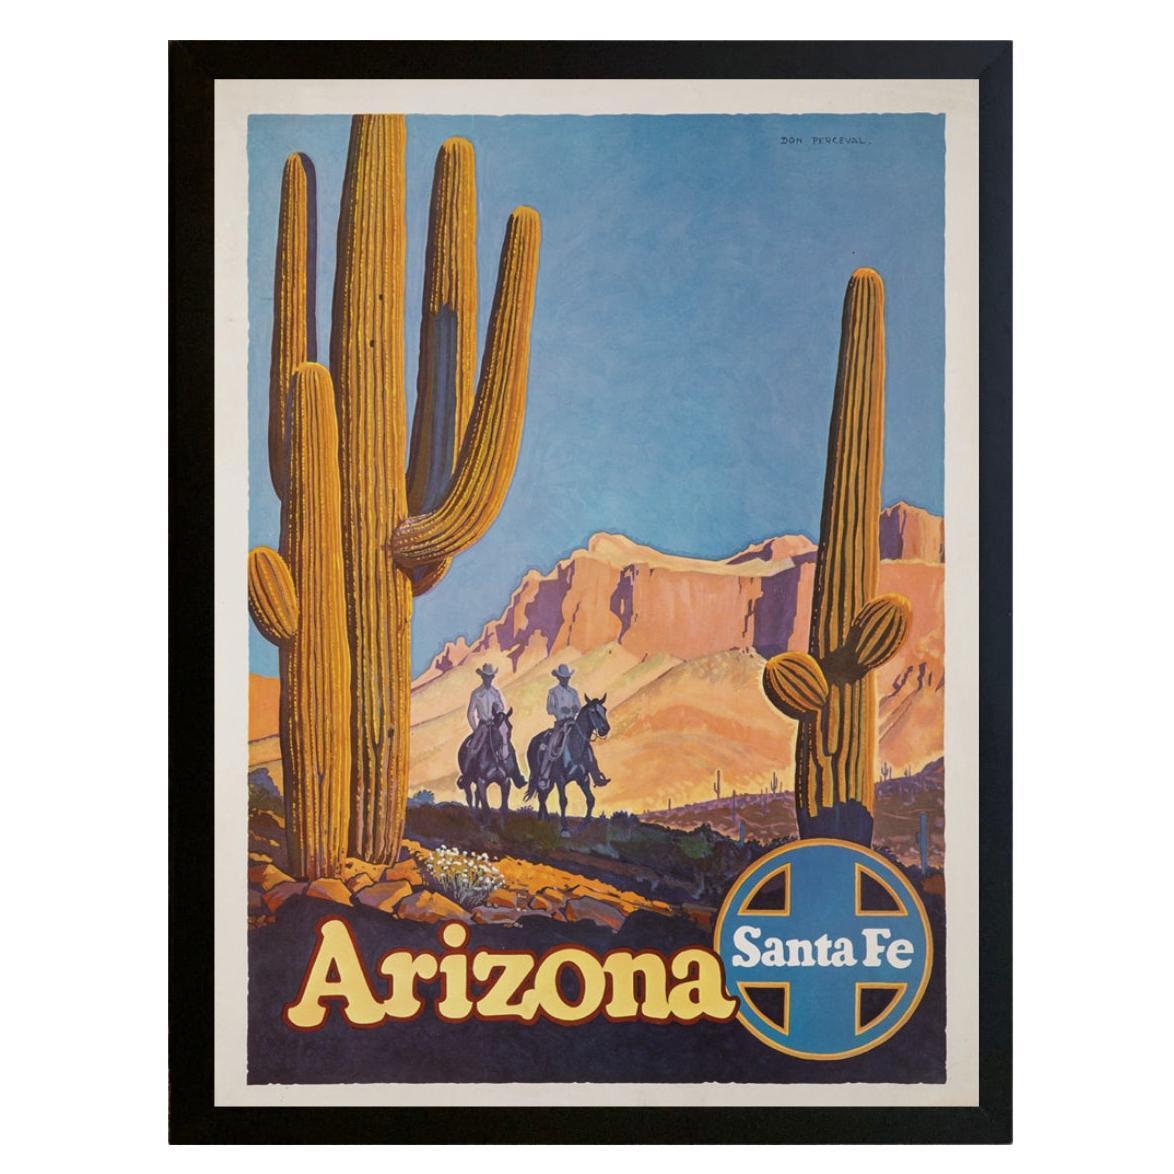 "Arizona" Vintage Santa Fe Railroad Travel Poster by Don Perceval, circa 1940s For Sale